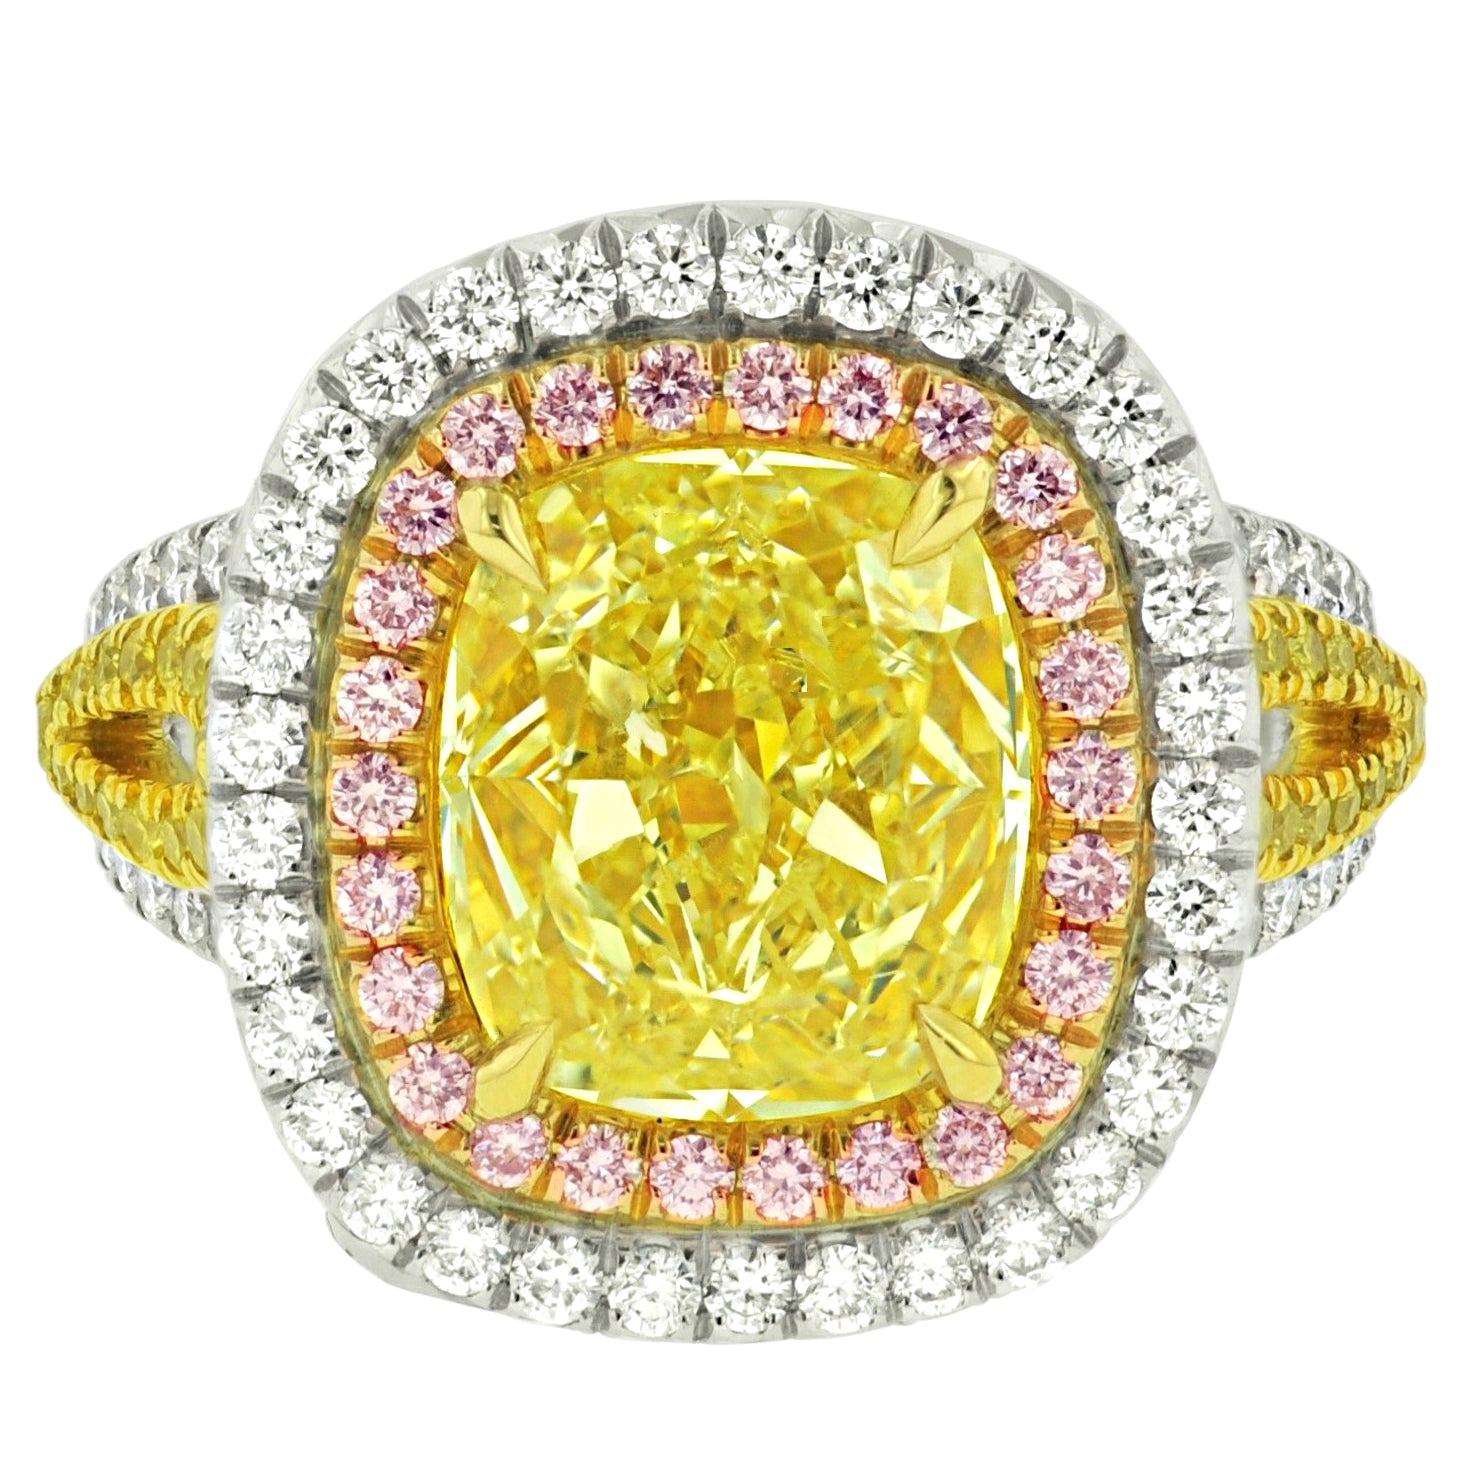 8.02 Carat Fancy Yellow Diamond Ring